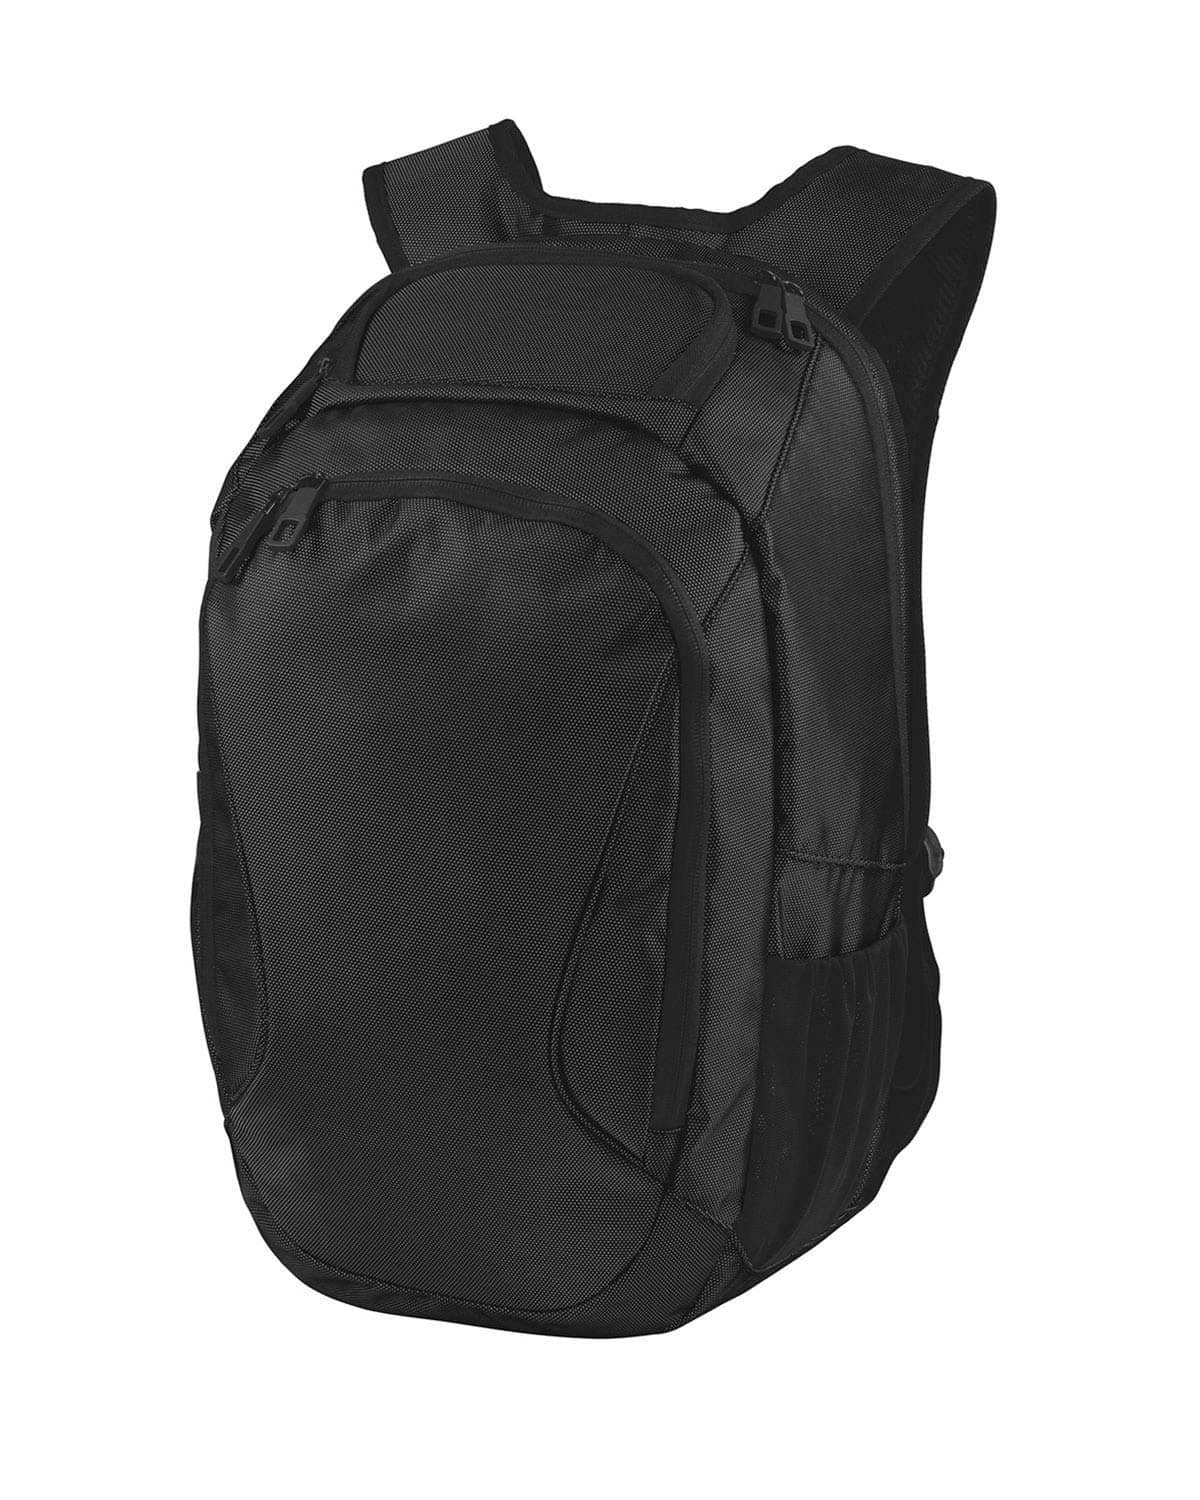 Port Authority BG212 Form Backpack